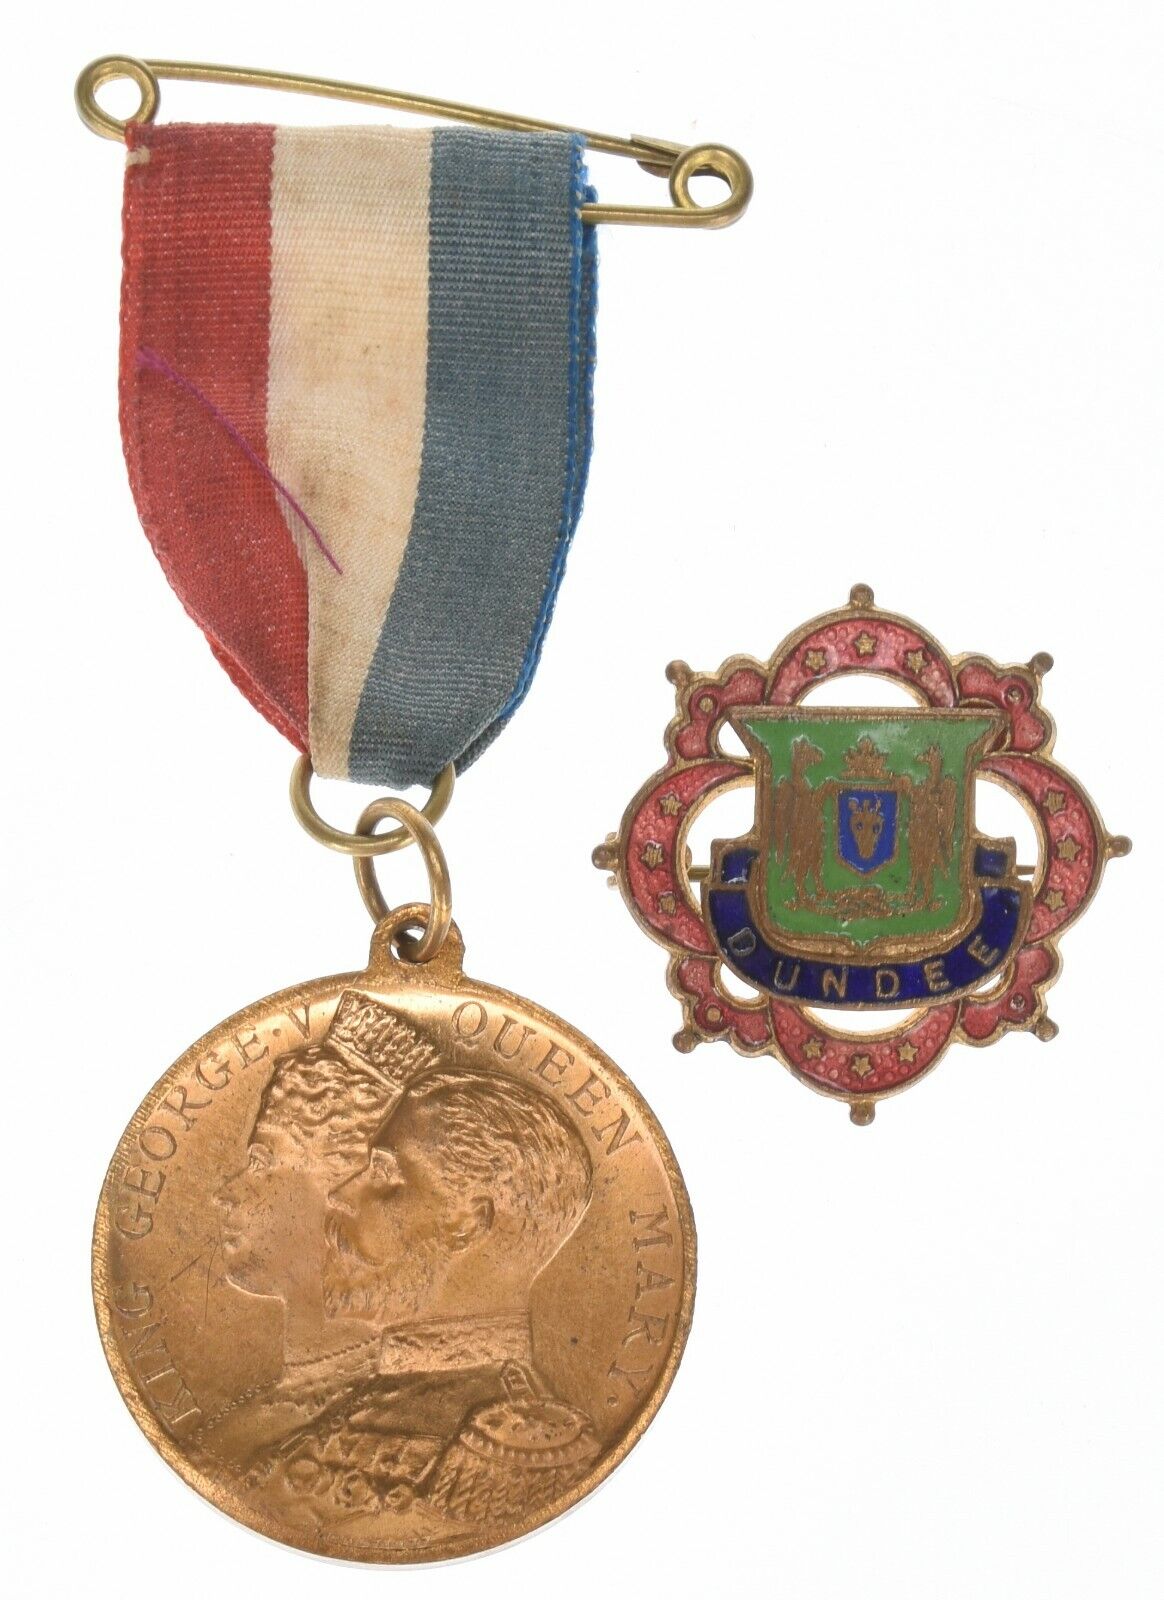 King George V Royal Visit  to Dundee Scotland Commemorative Medal July 10, 1914 